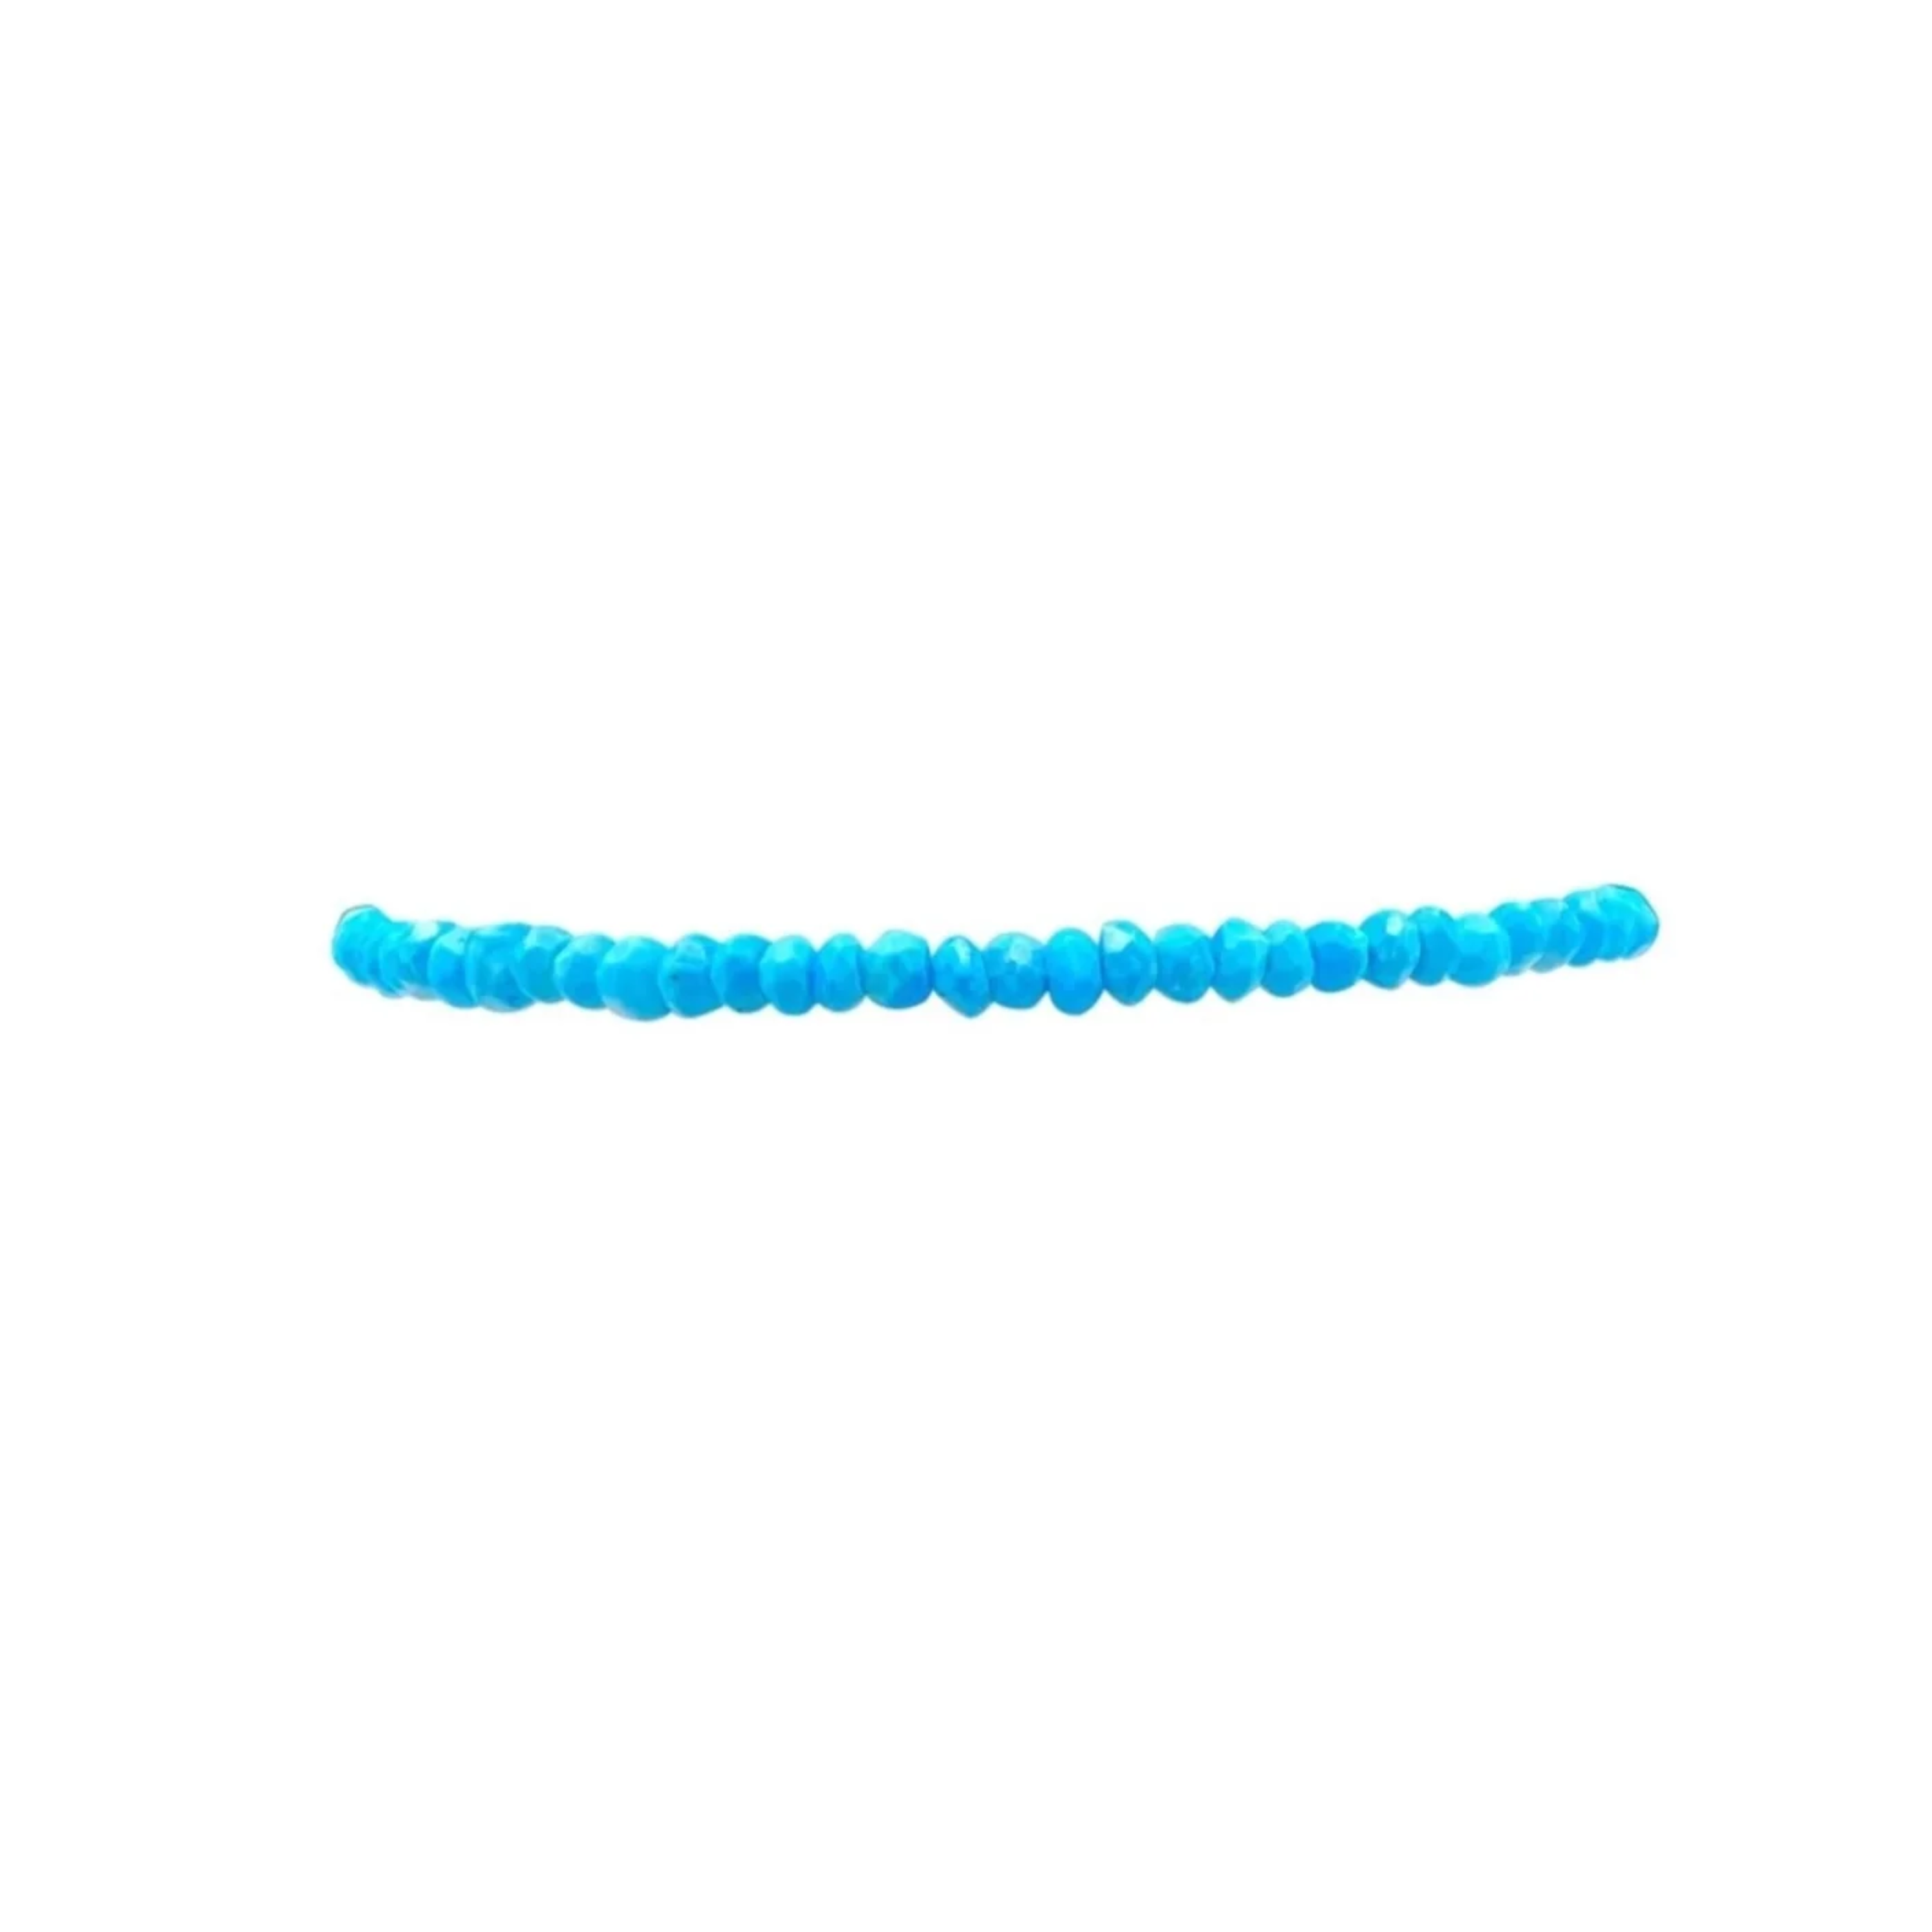 Turquoise 2mm Bead Bracelet by Karen Lazar